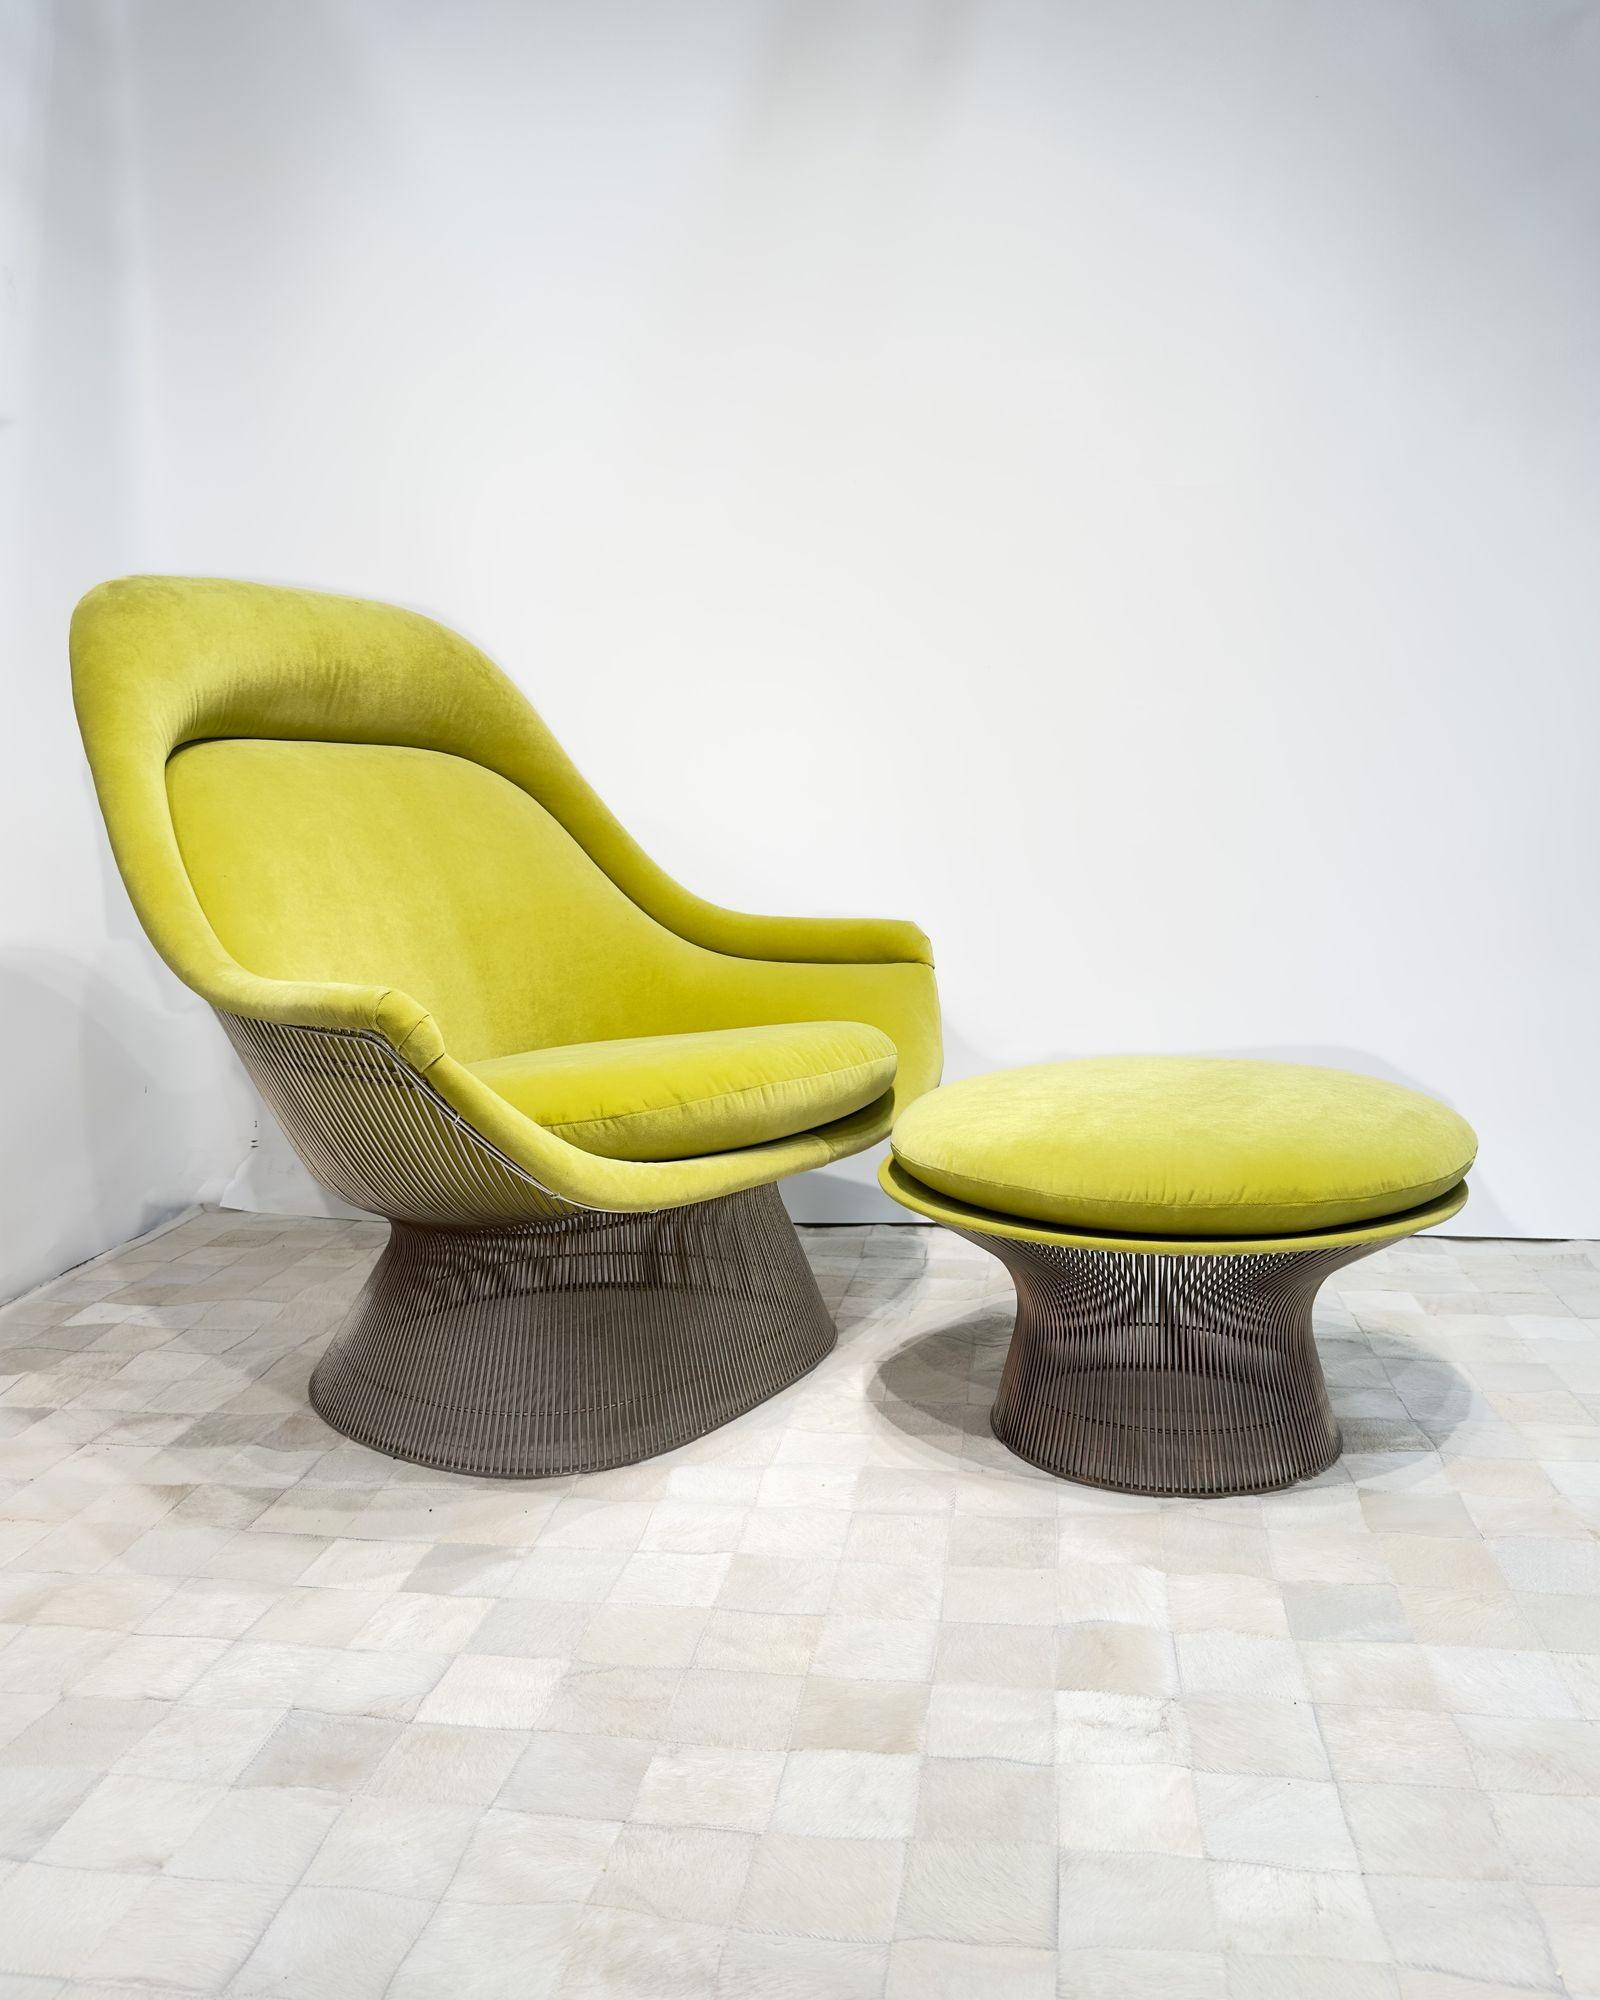 Frühe Produktion des Warren Platner Easy Chair für Knoll High back Lounge Chair w/Ottoman, Modell 1725. Neu gepolstert mit grünem Samt.
Maße: 39,5